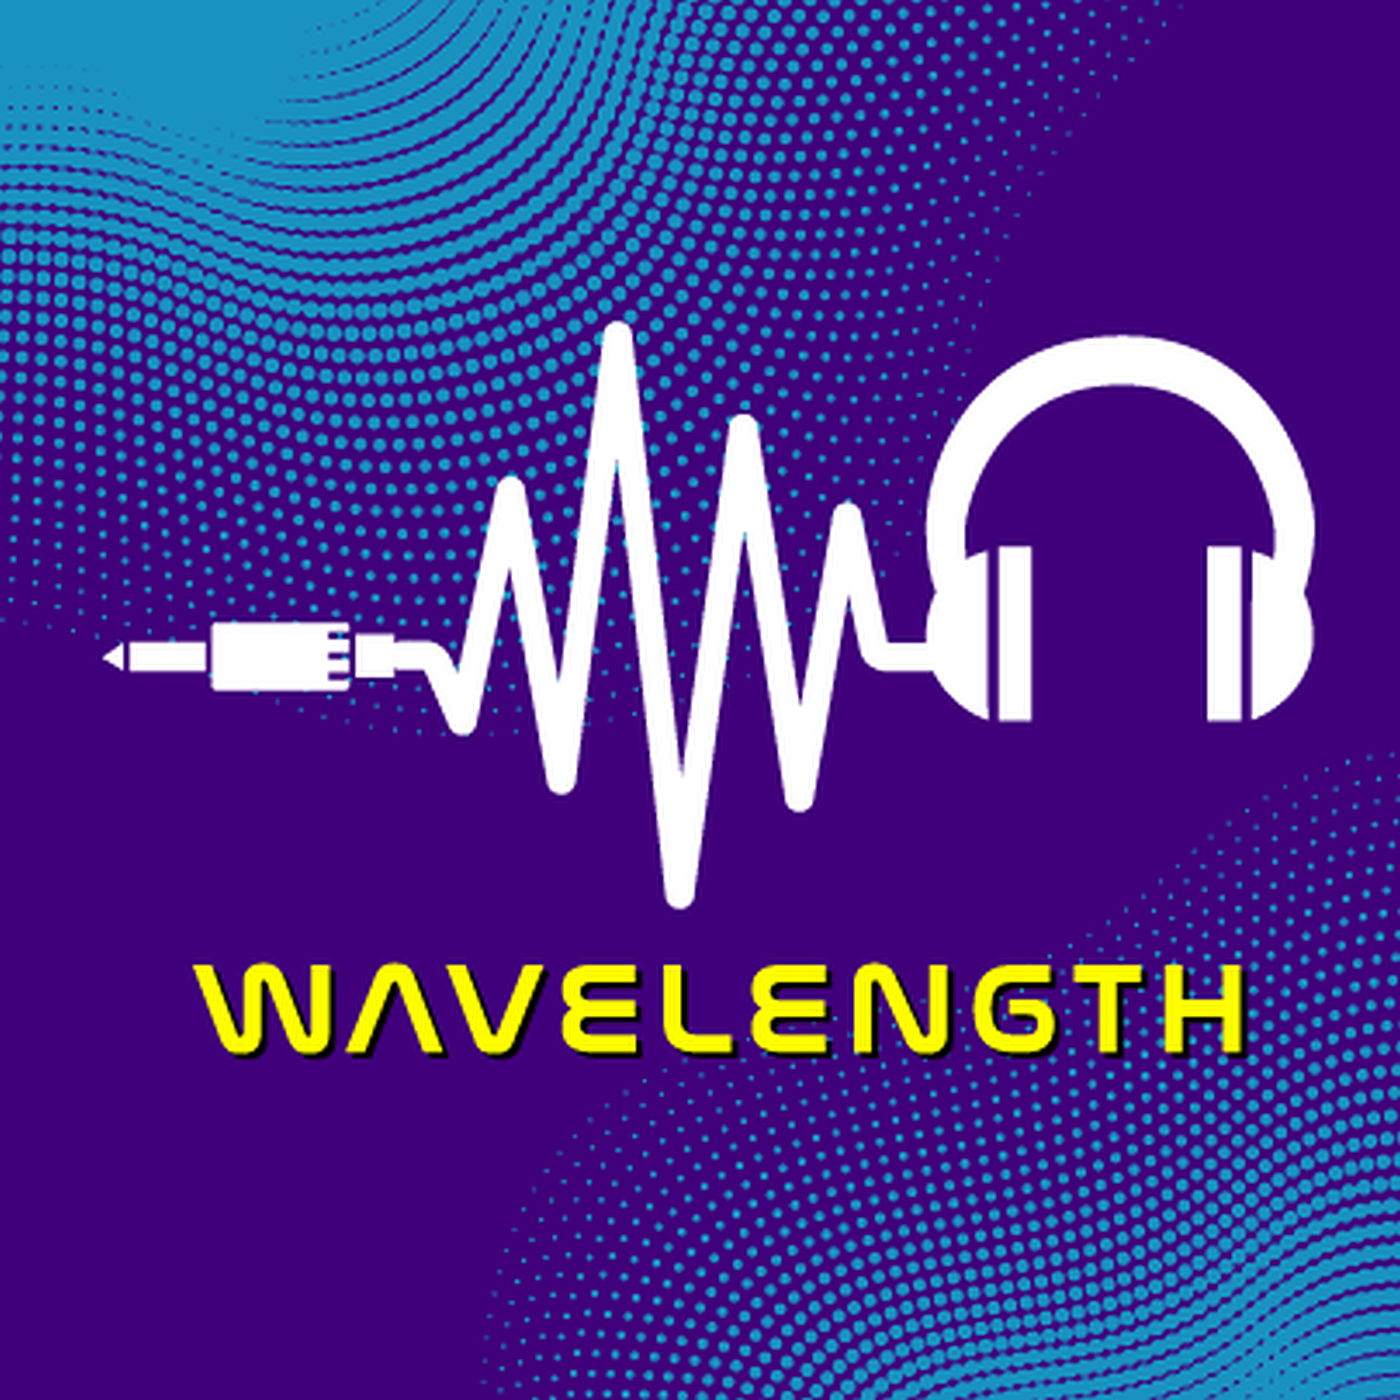 Wavelength: Regional Beats